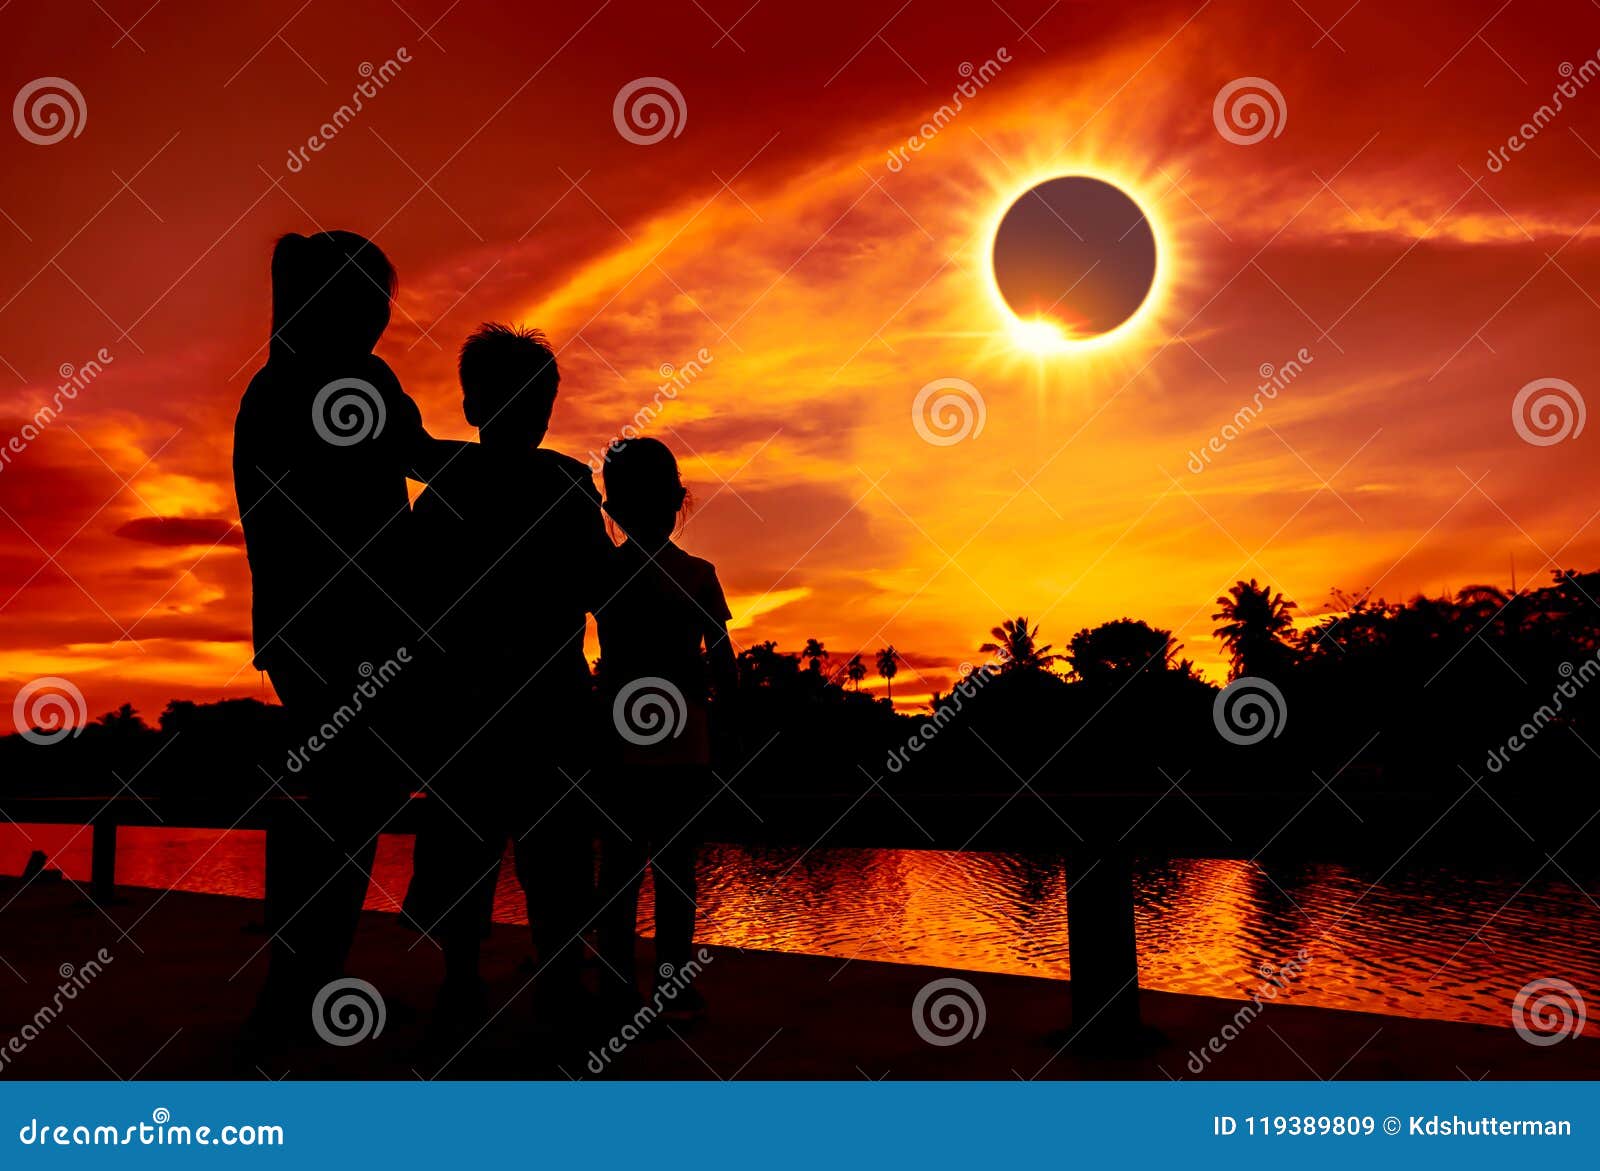 natural phenomenon. three looking at looking at total solar eclipse.